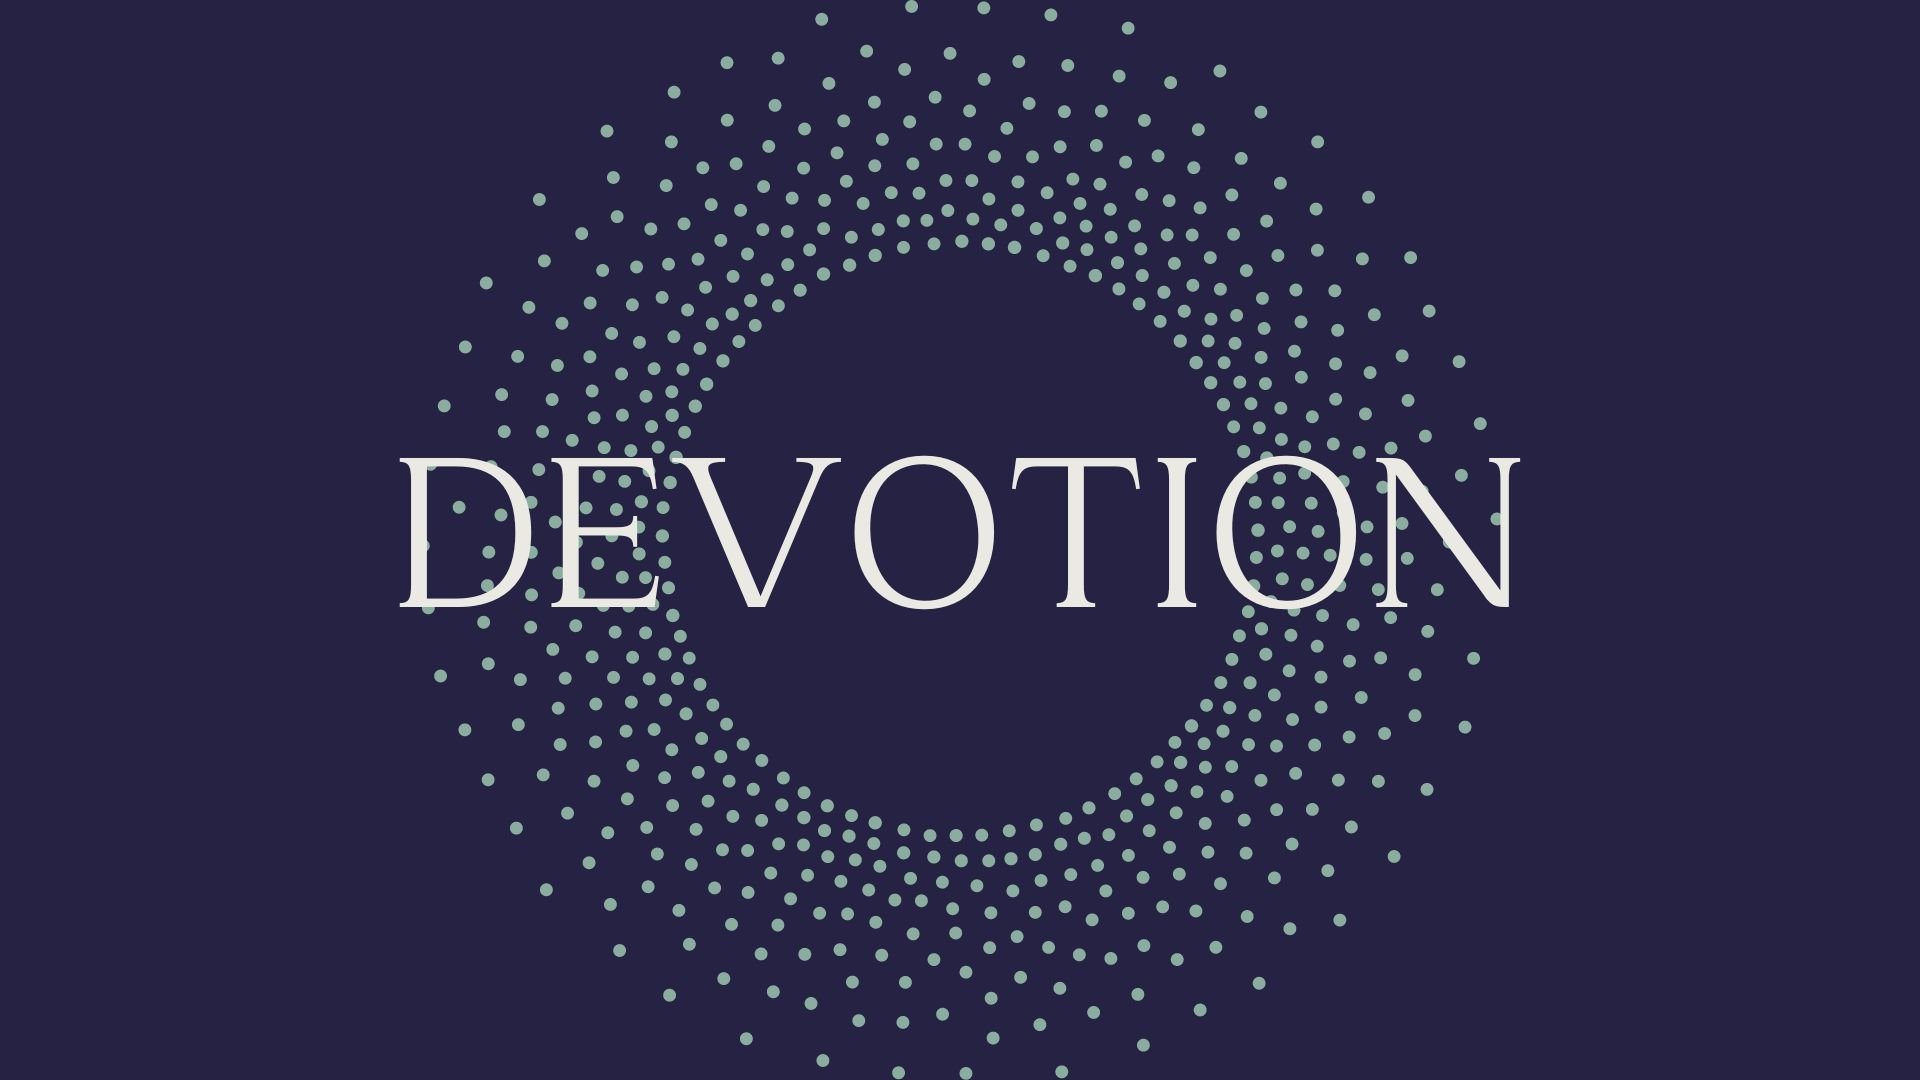 DEVOTION SERIES (1920 × 1080 px).jpg